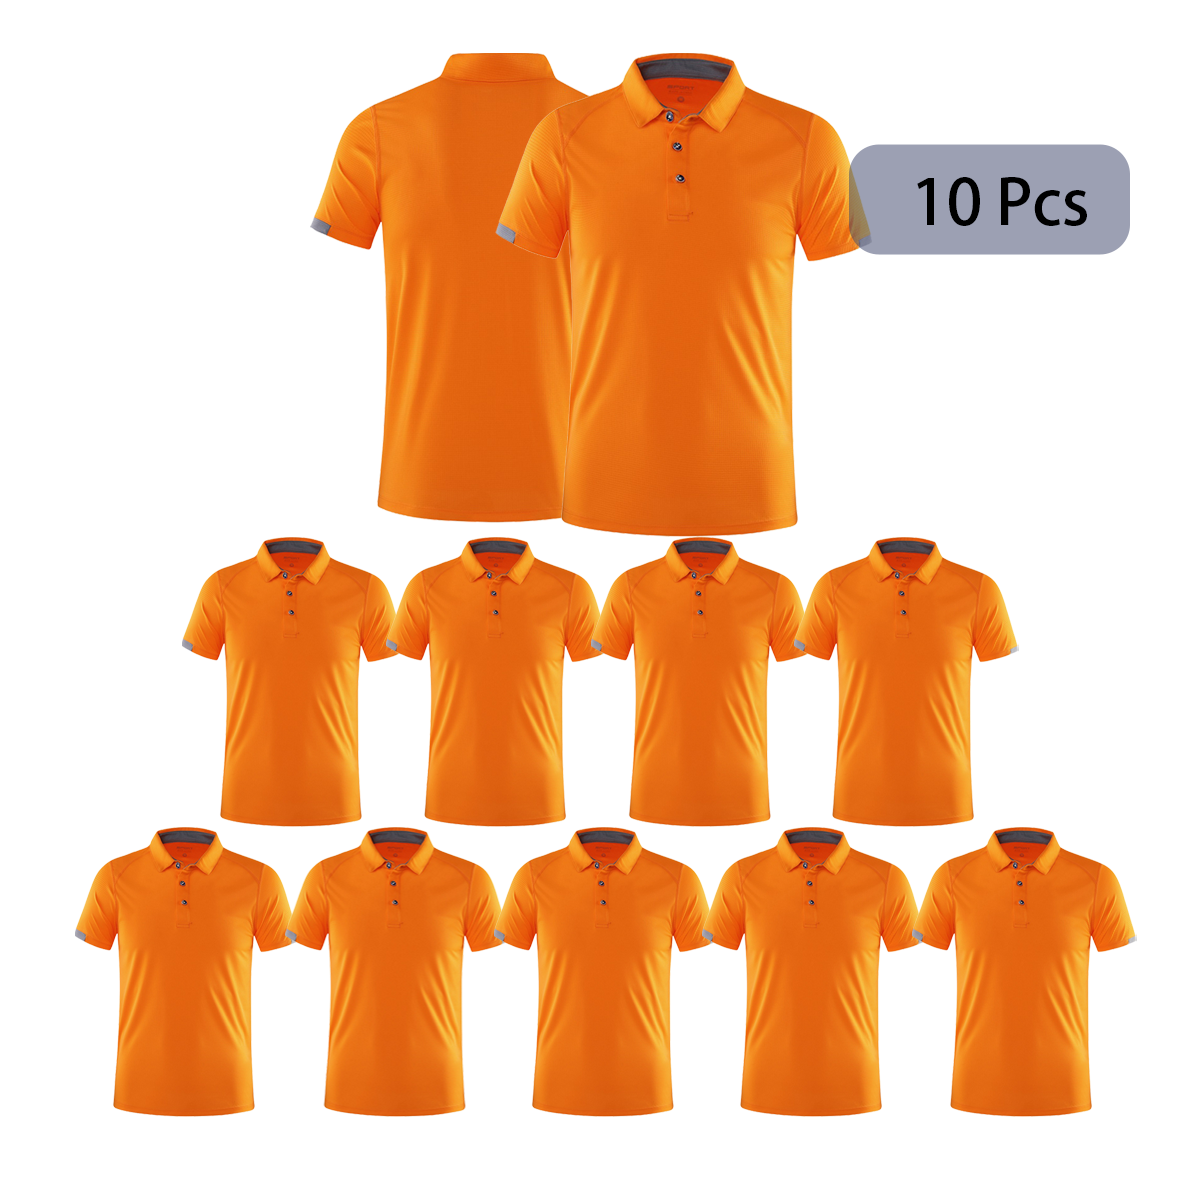 10 pcs dry fit polo shirt